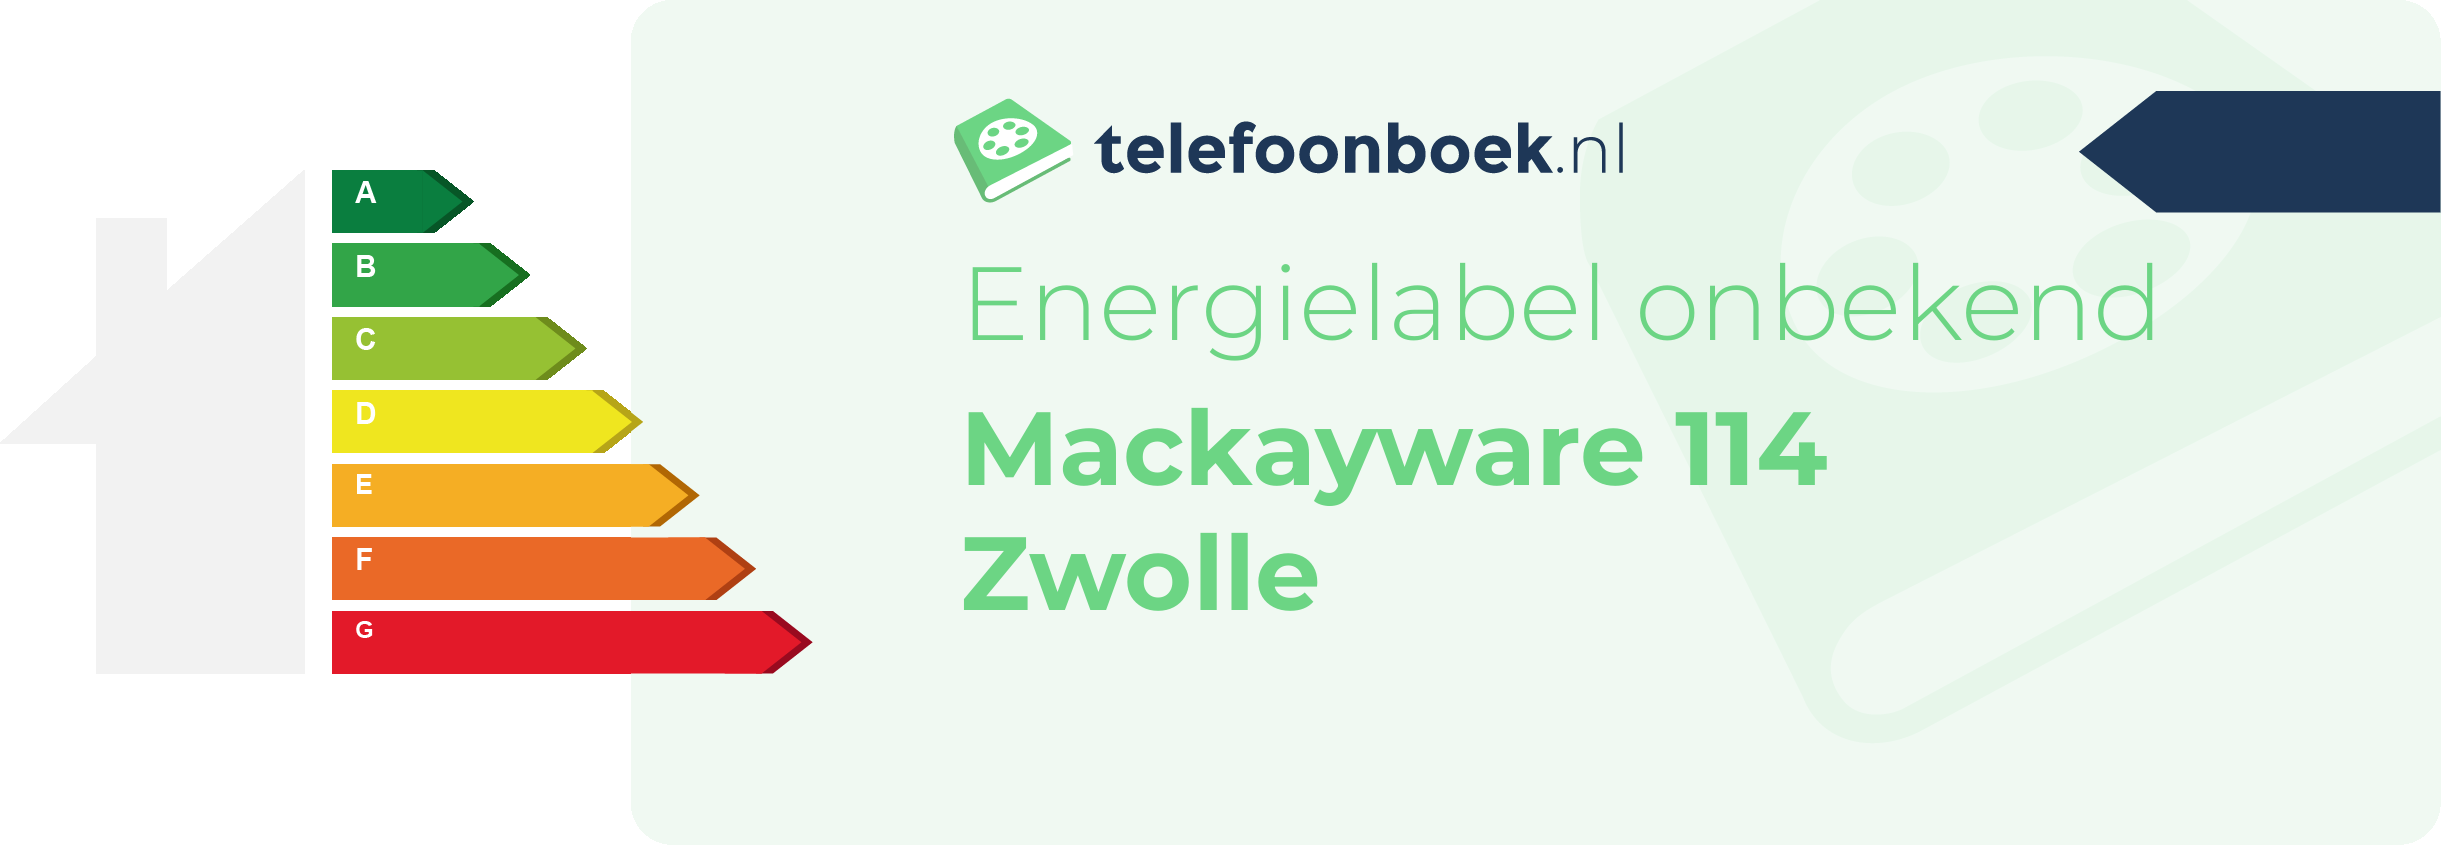 Energielabel Mackayware 114 Zwolle